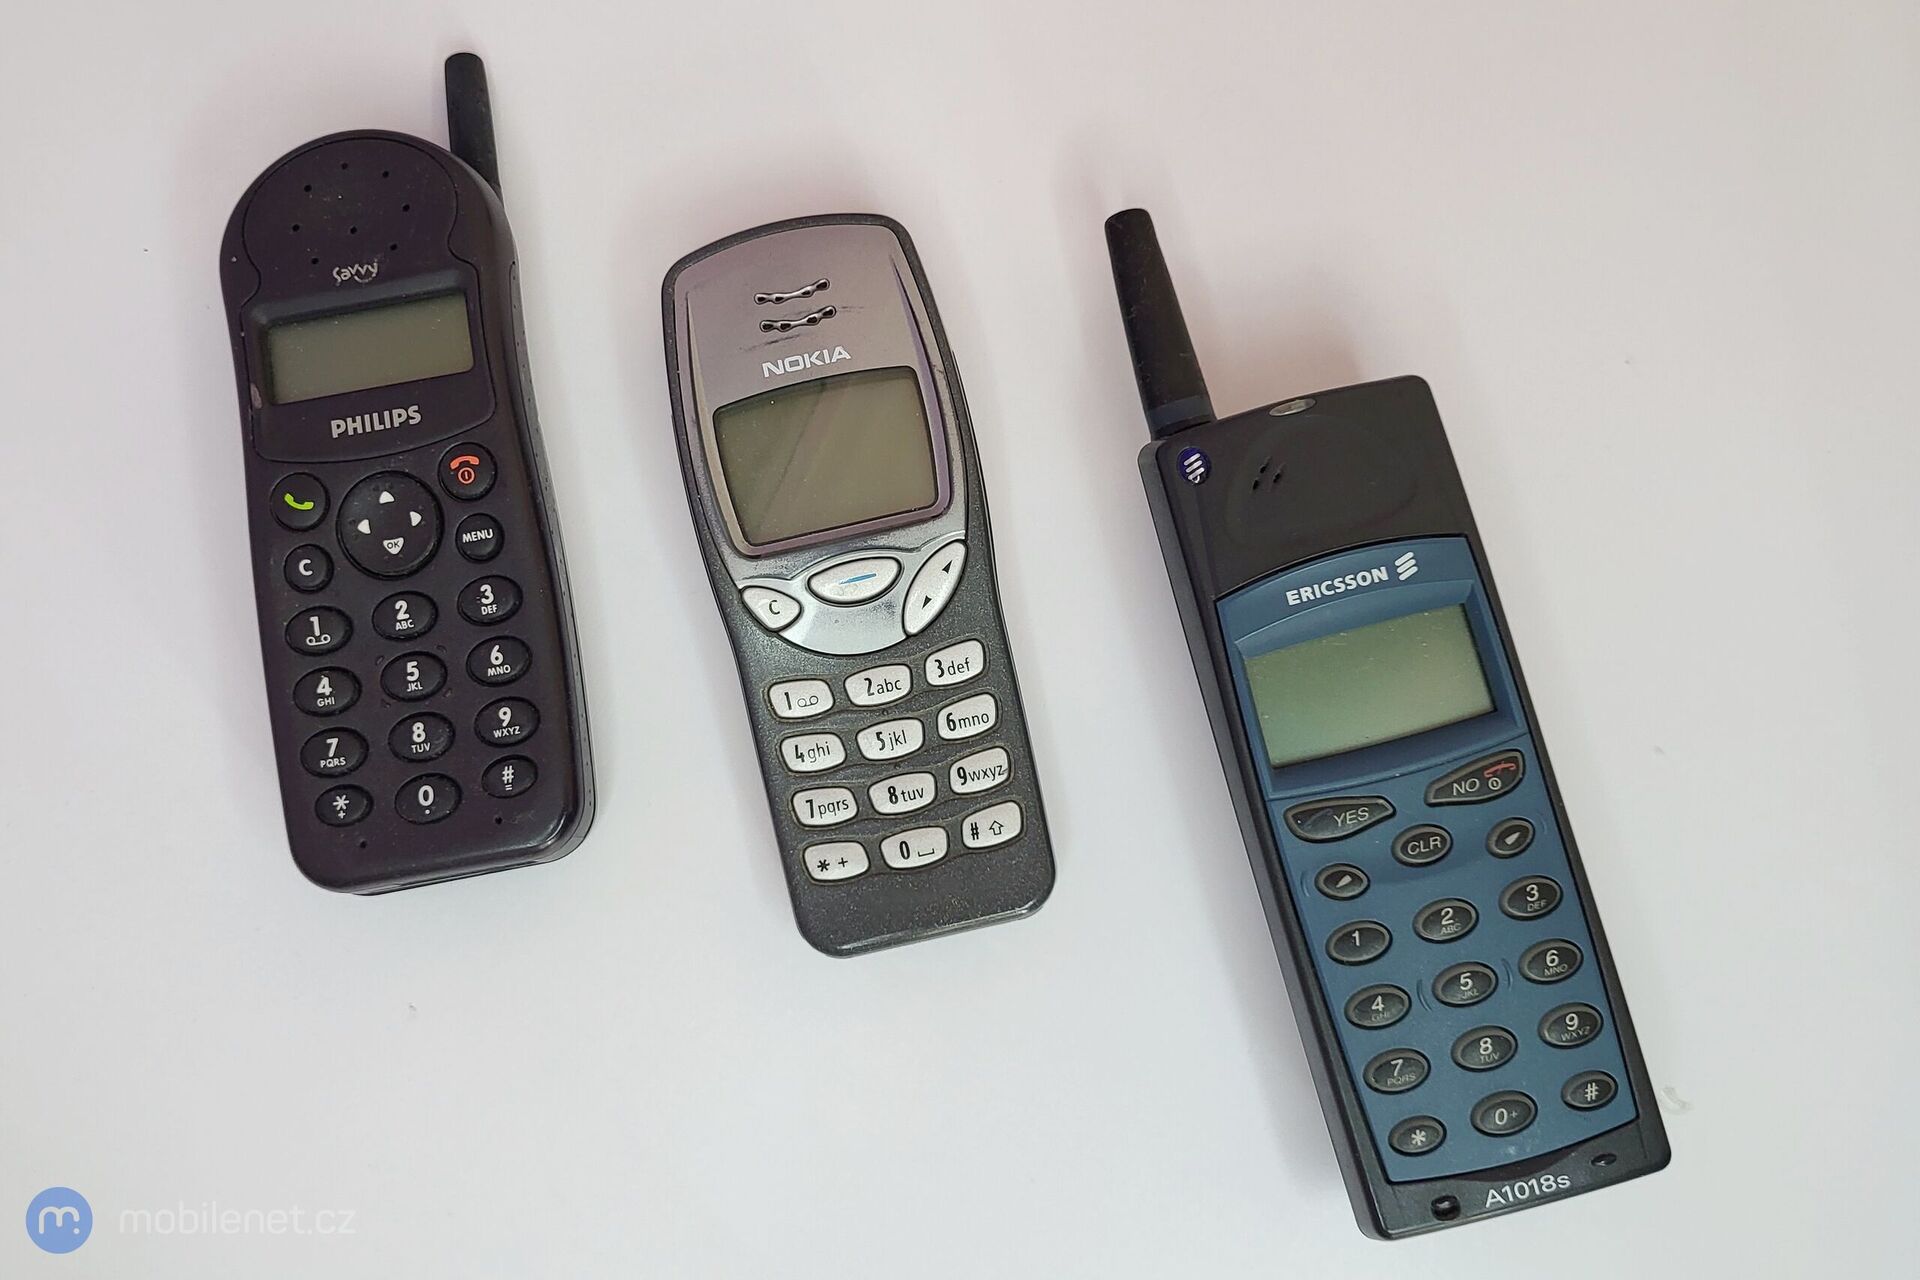 Philips Savvy, Nokia 3210, Ericsson A1018s